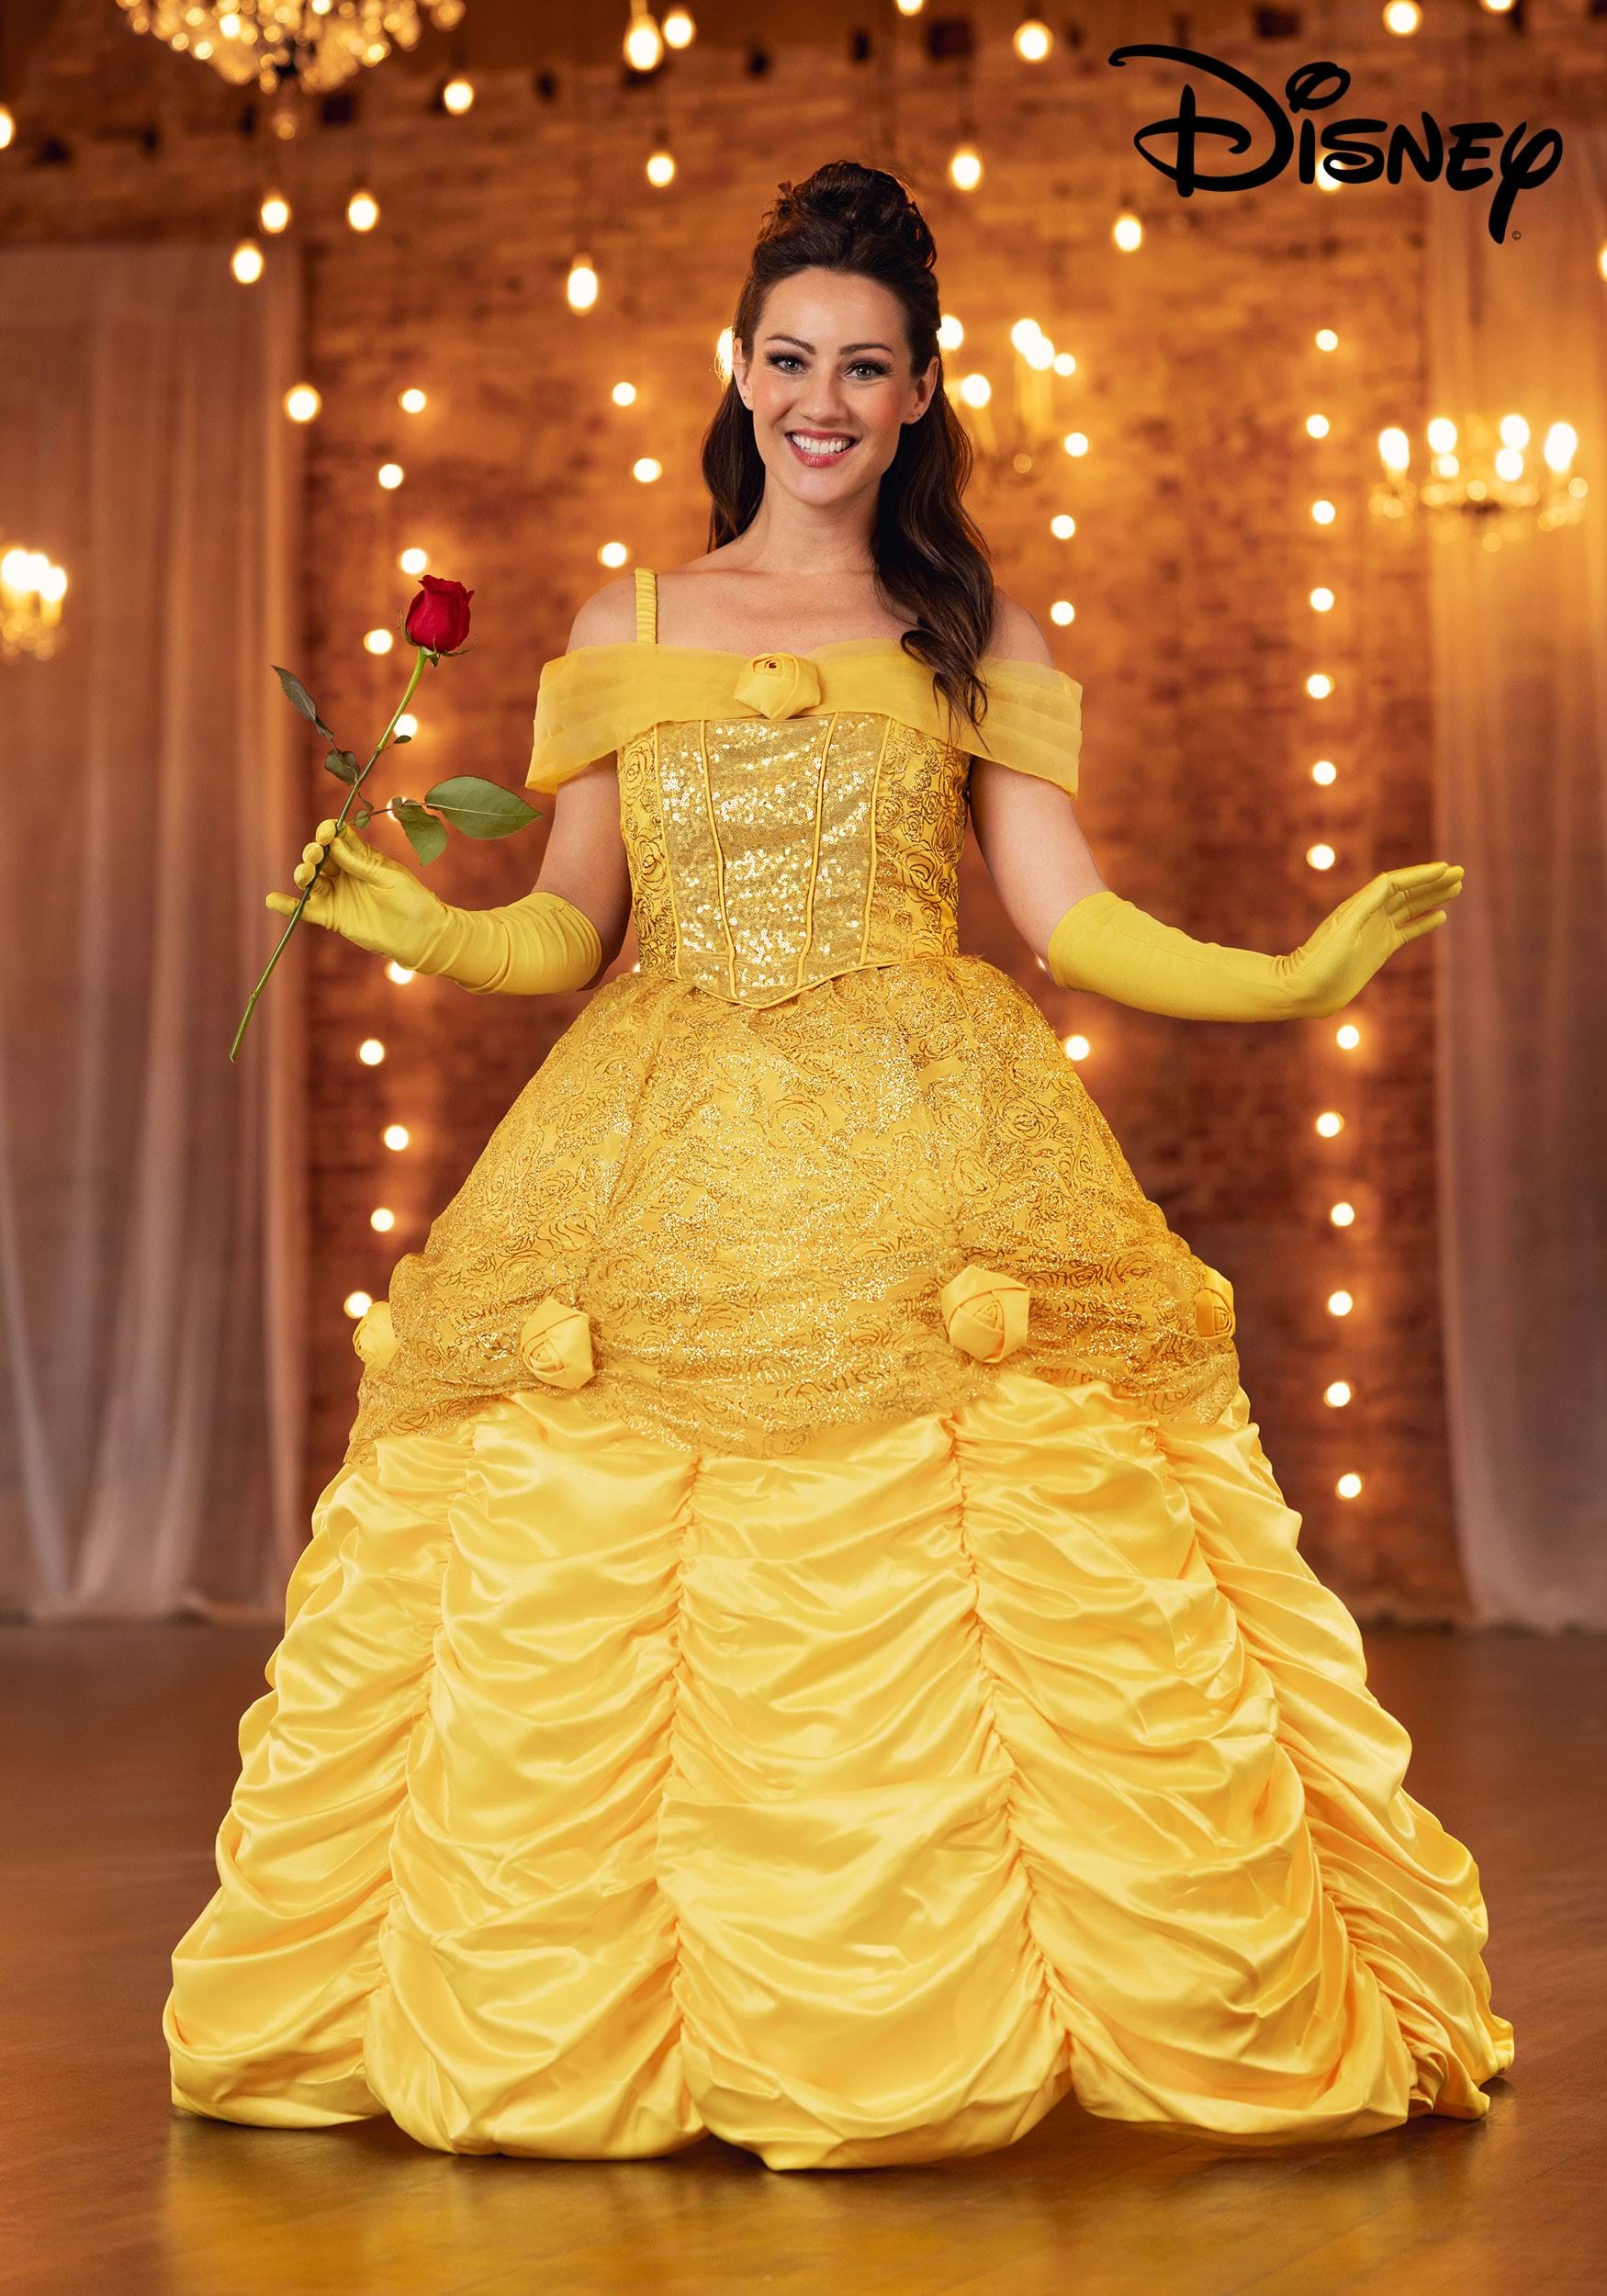 Belle Disney Costume | tunersread.com